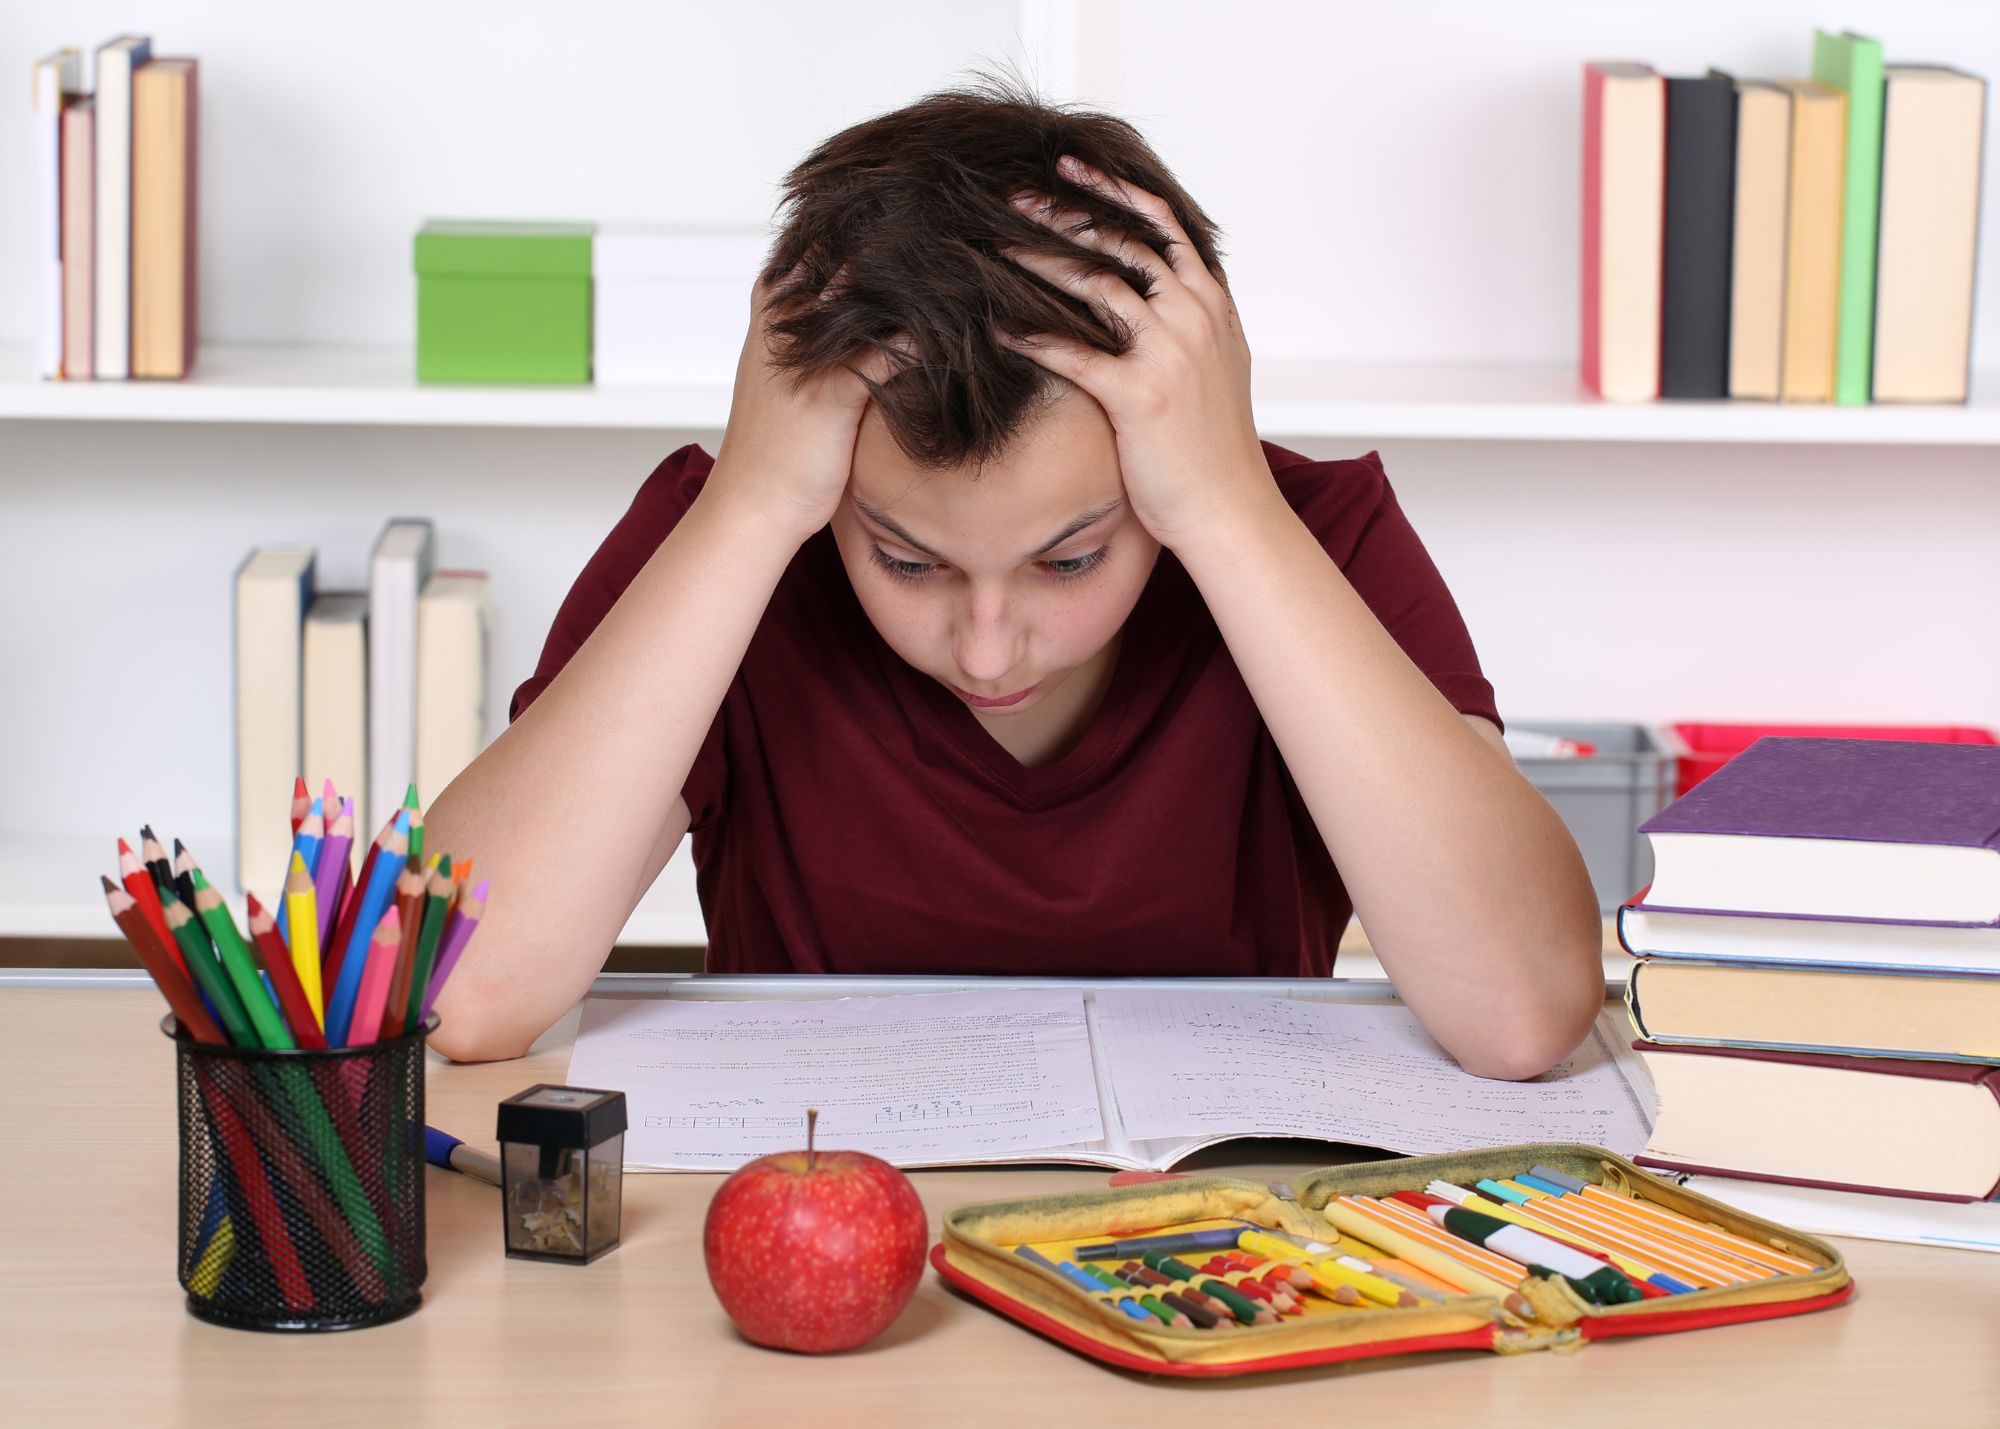 Boy feeling stressed doing school work